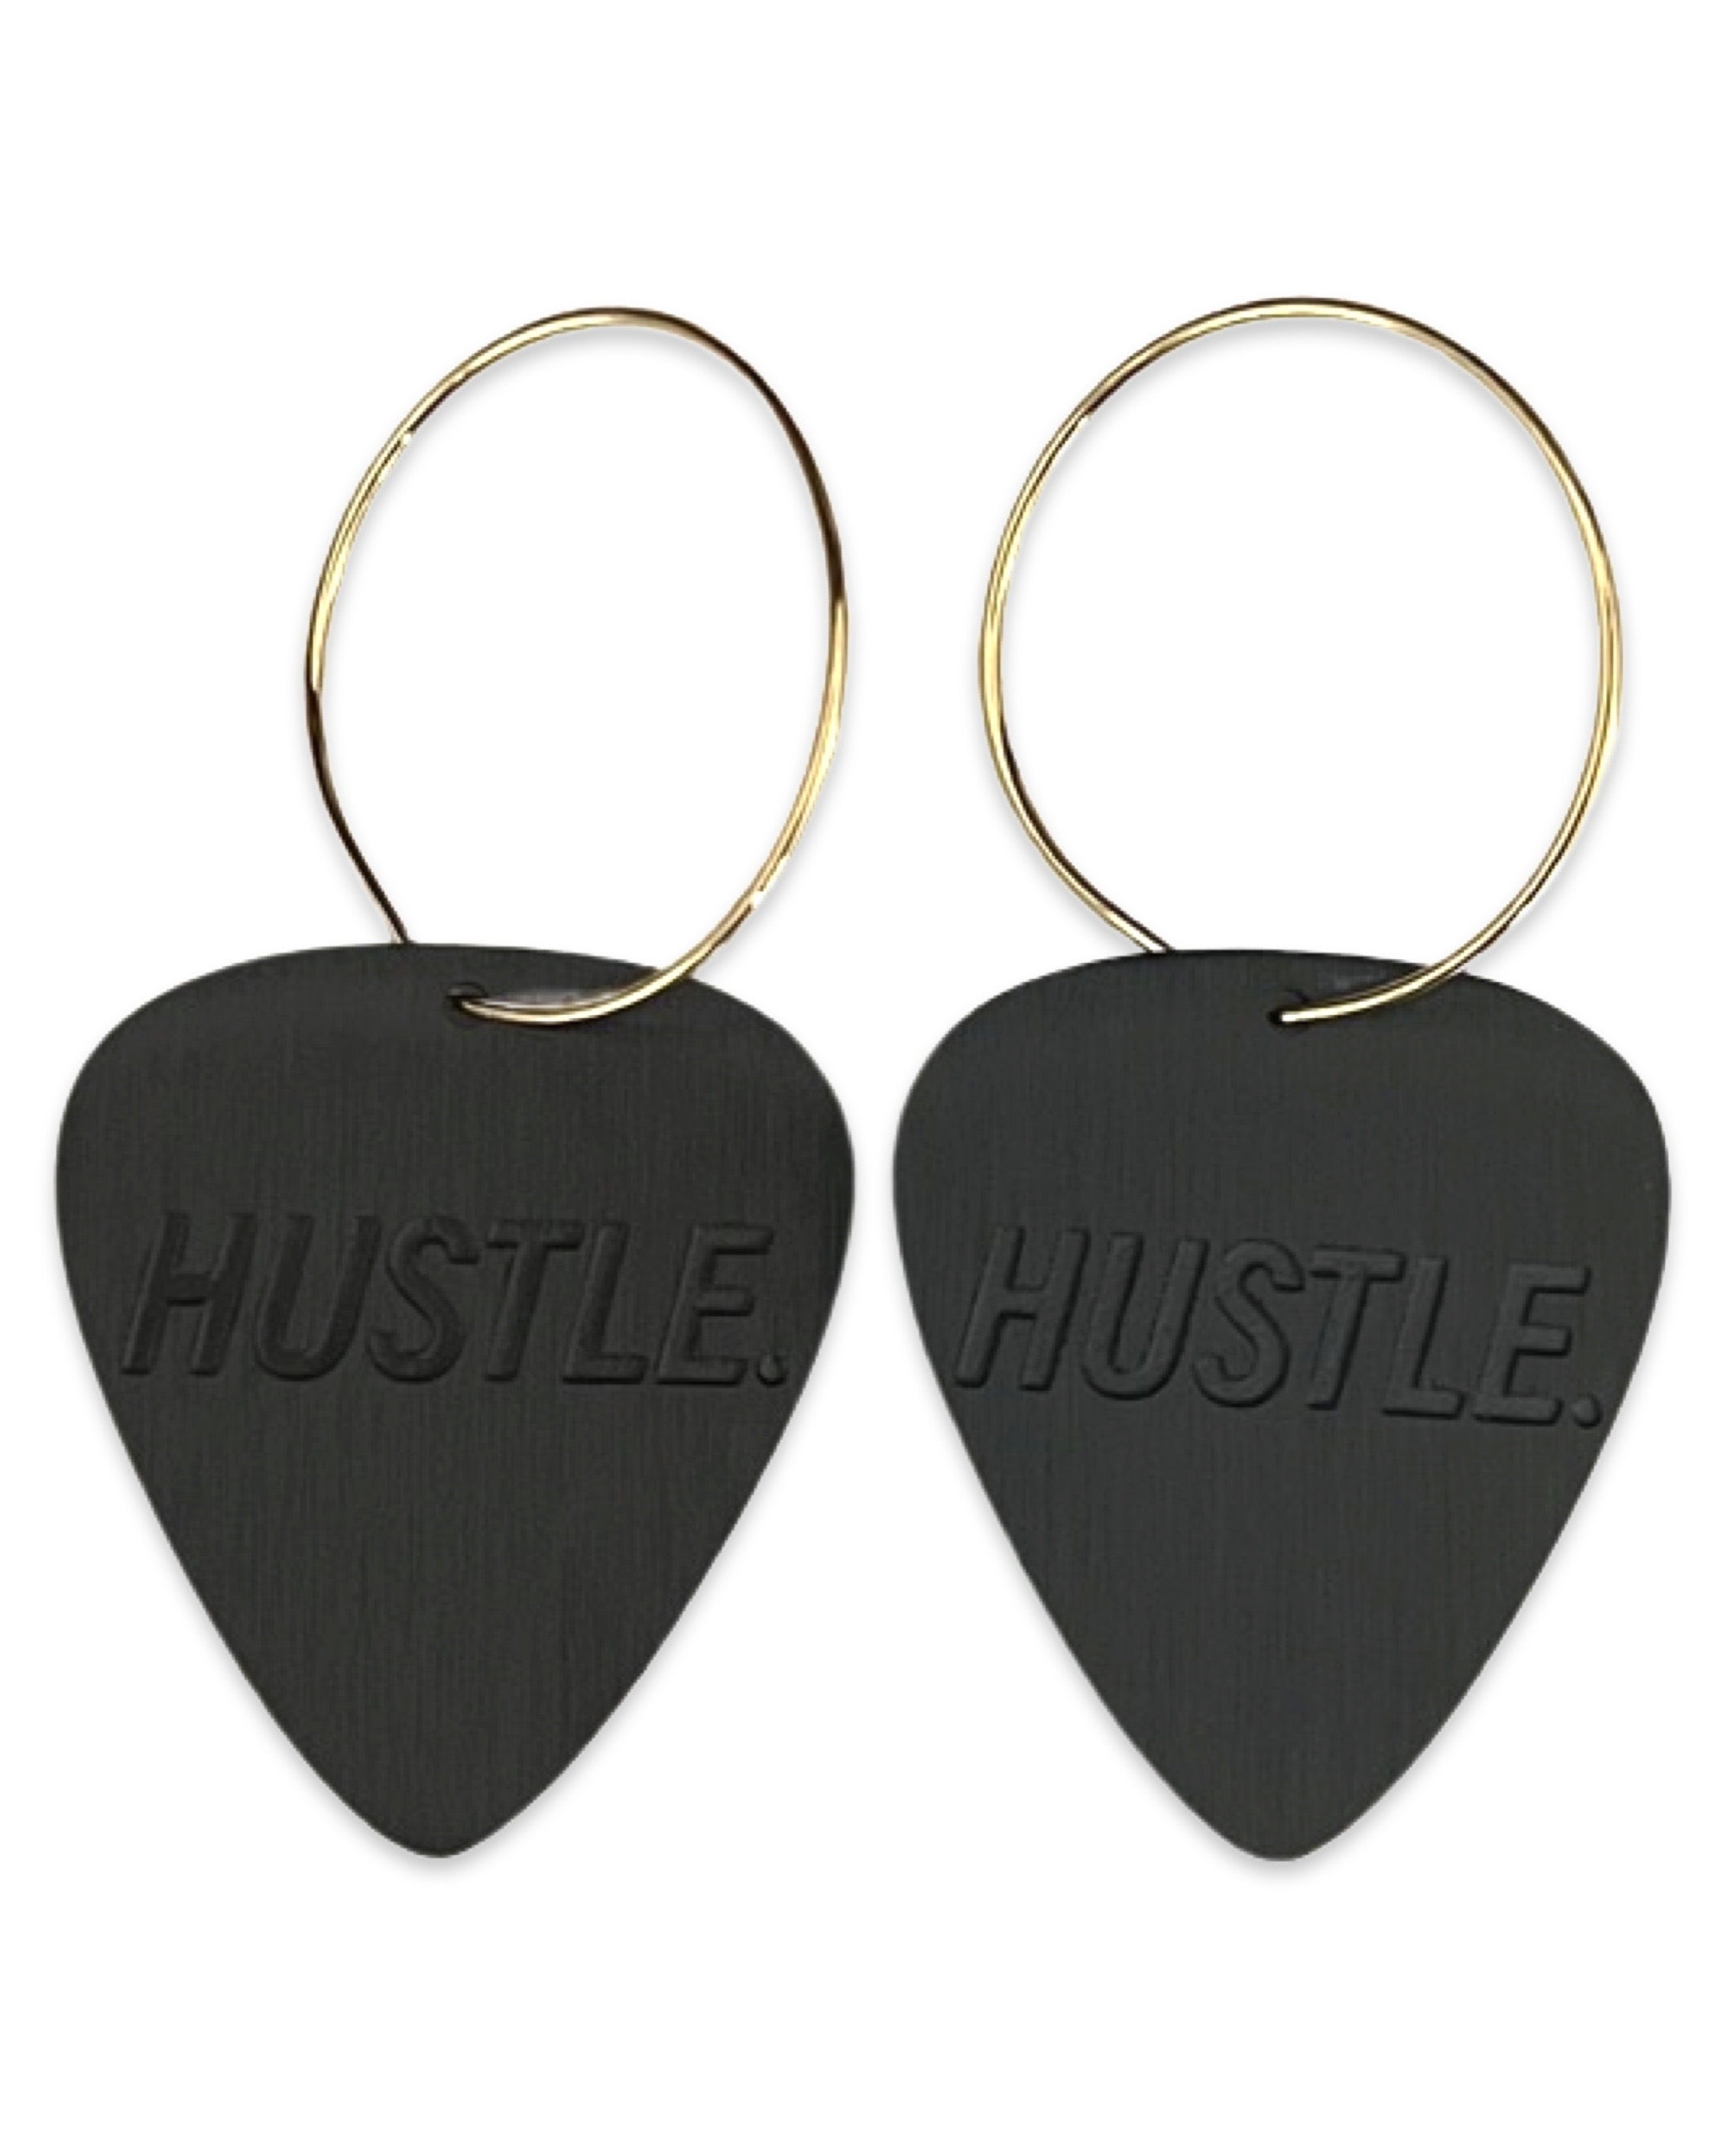 HUSTLE. Black Steel Reversible Single Guitar Pick Earrings